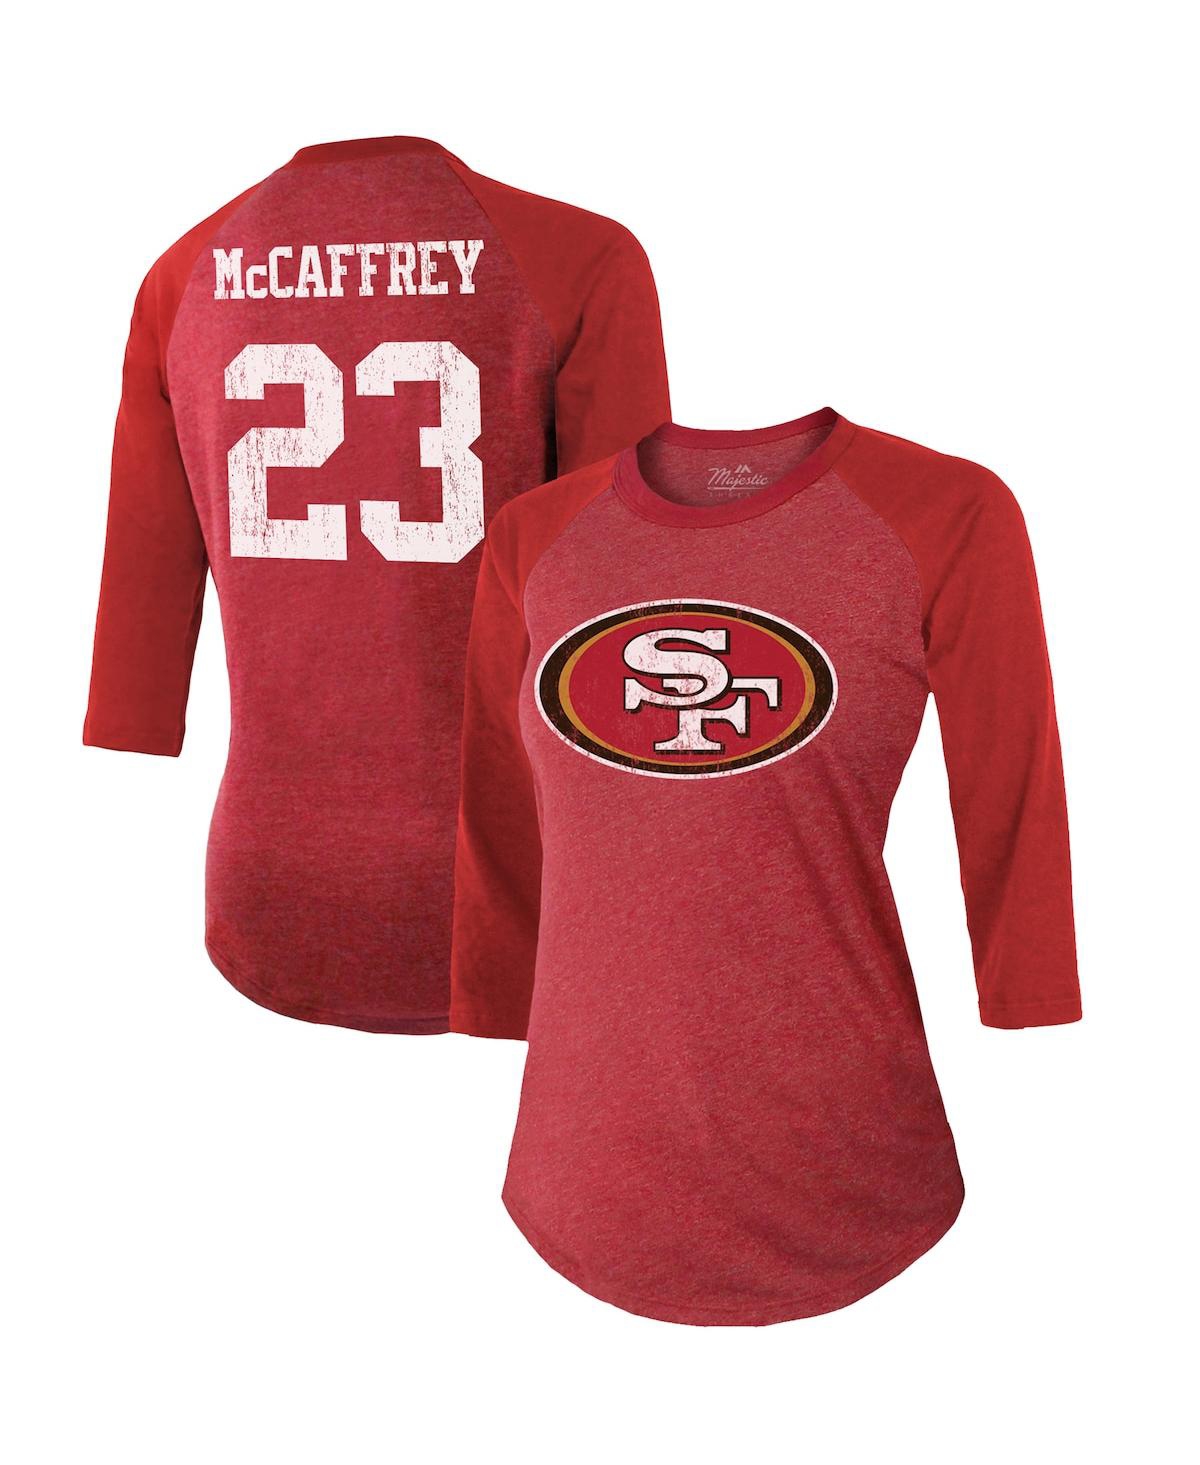 Women's Majestic Threads Christian McCaffrey Scarlet San Francisco 49ers Name and Number Tri-Blend Raglan 3/4 Sleeve T-shirt - Scarlet